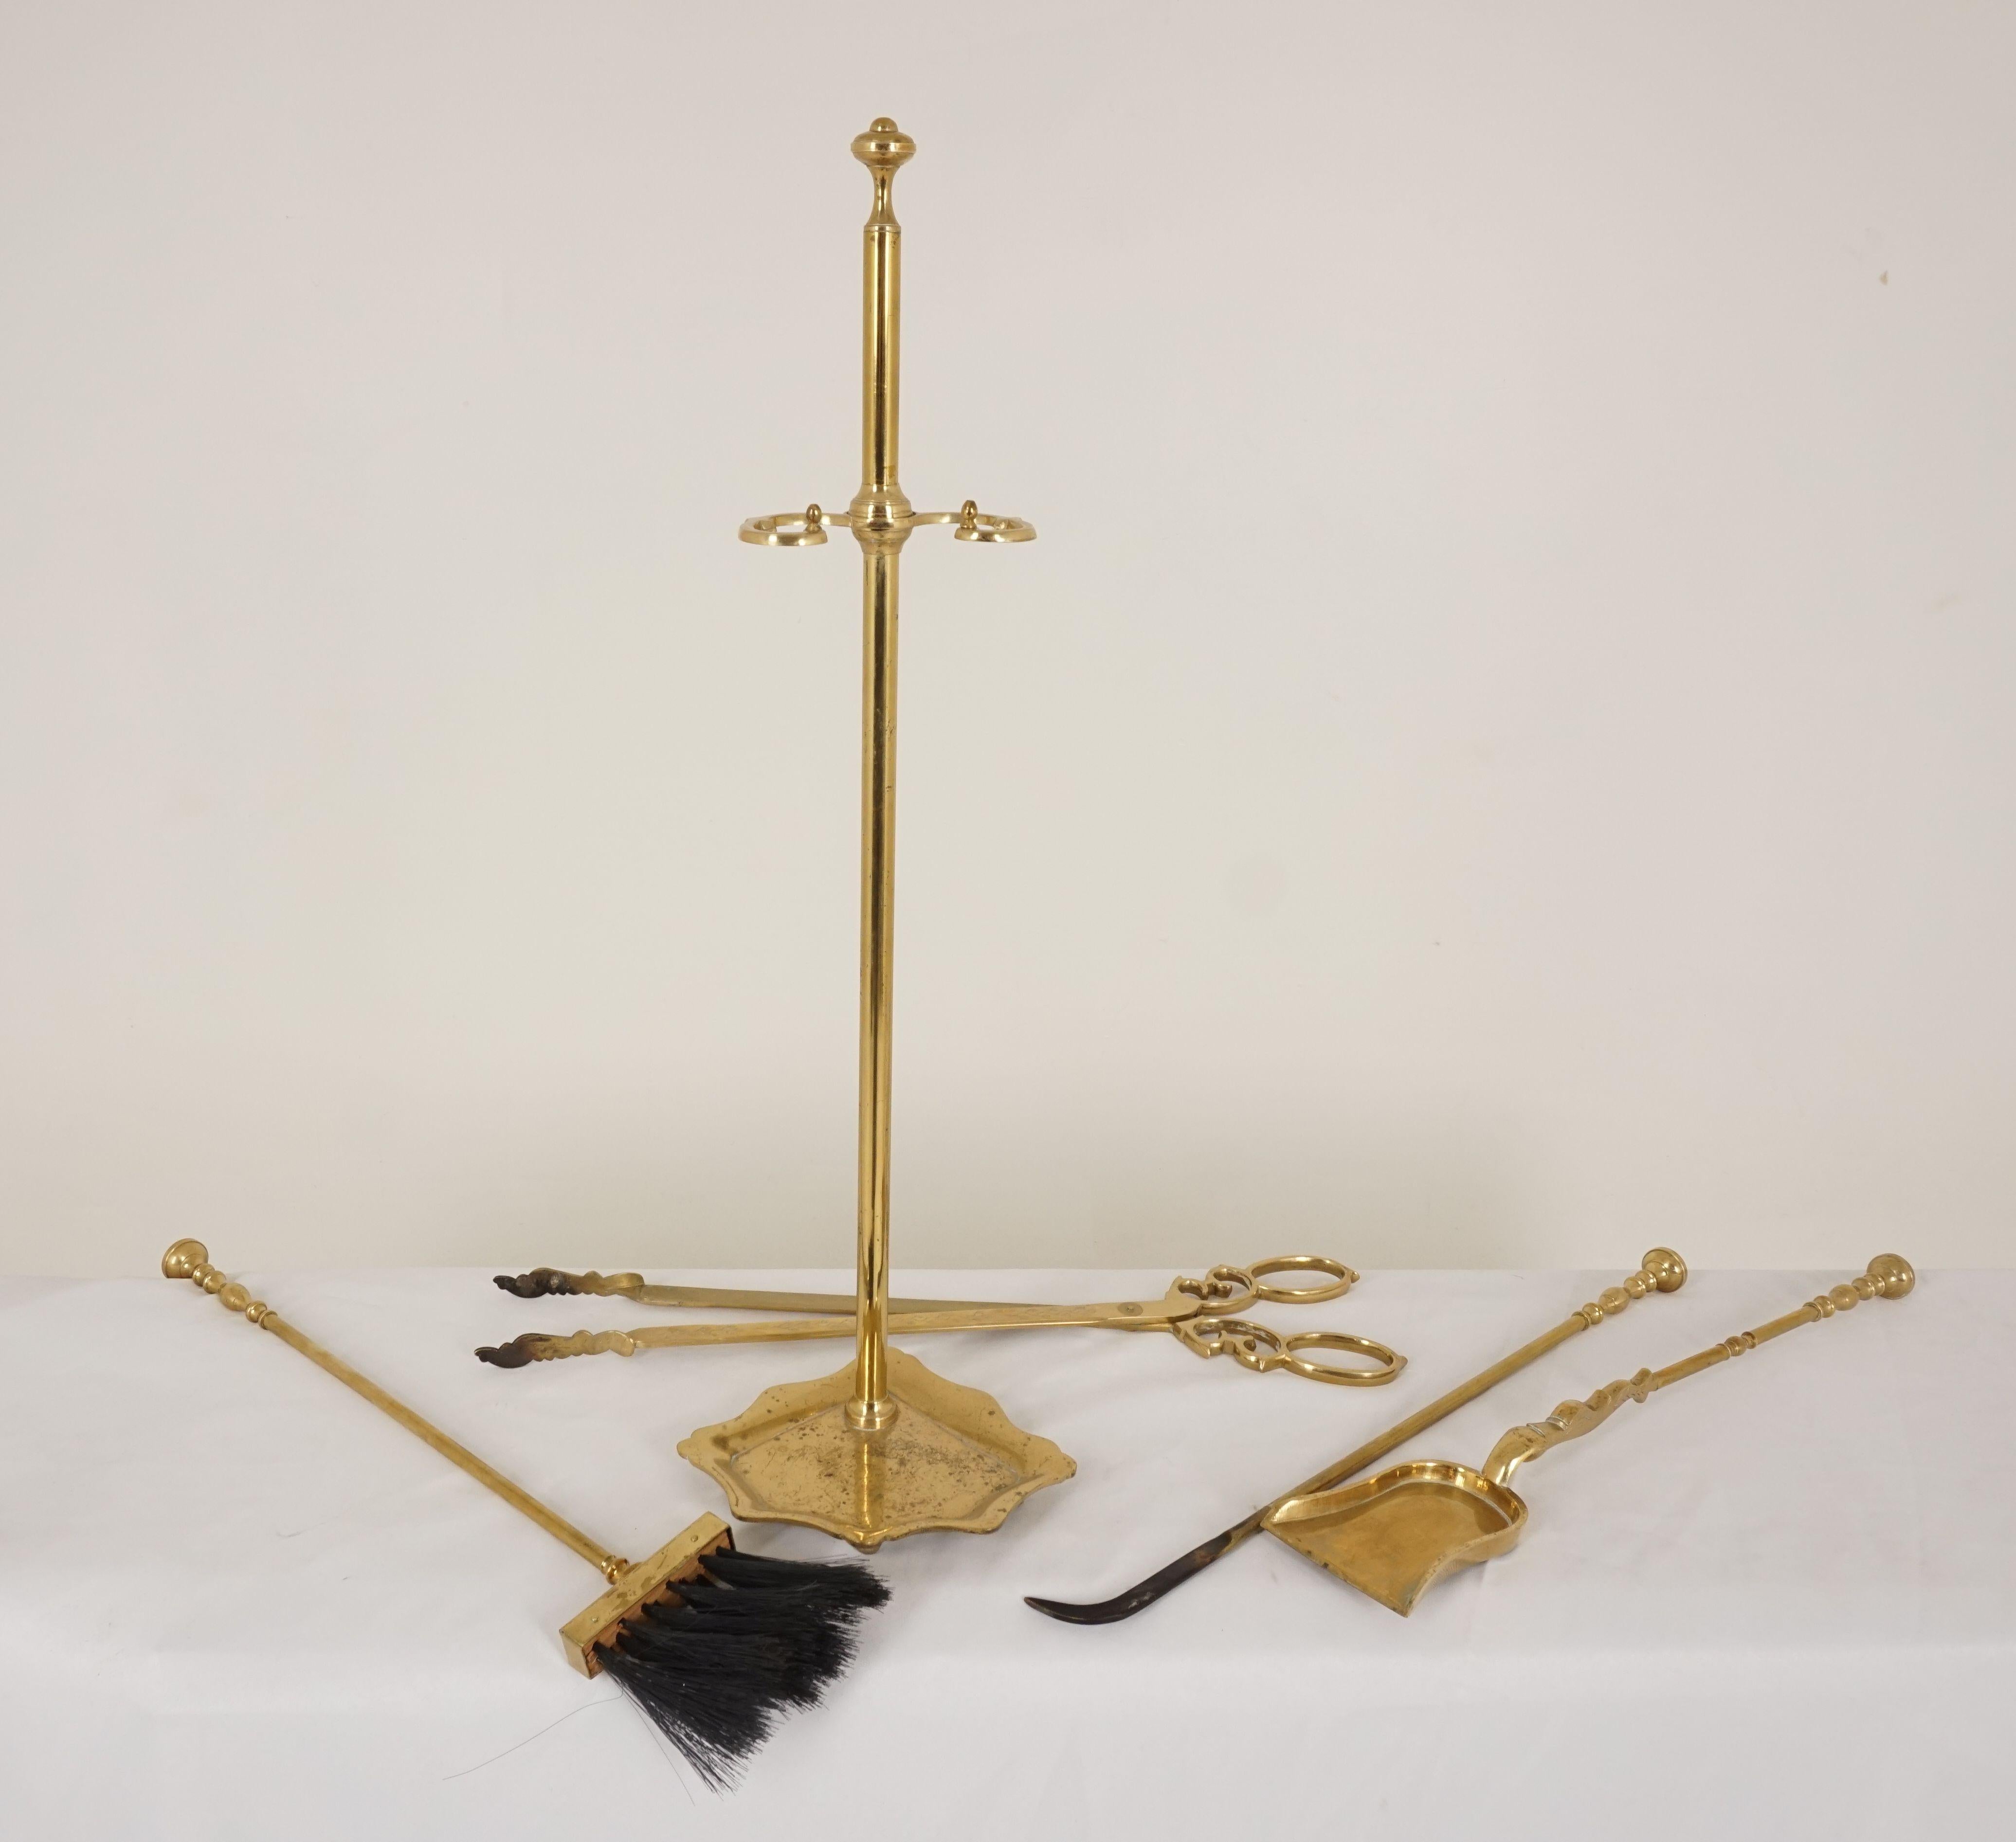 Hand-Crafted Vintage Brass Fireplace Tools, Poker, Broom, Tongs, Shovel, Companion Set, B2491